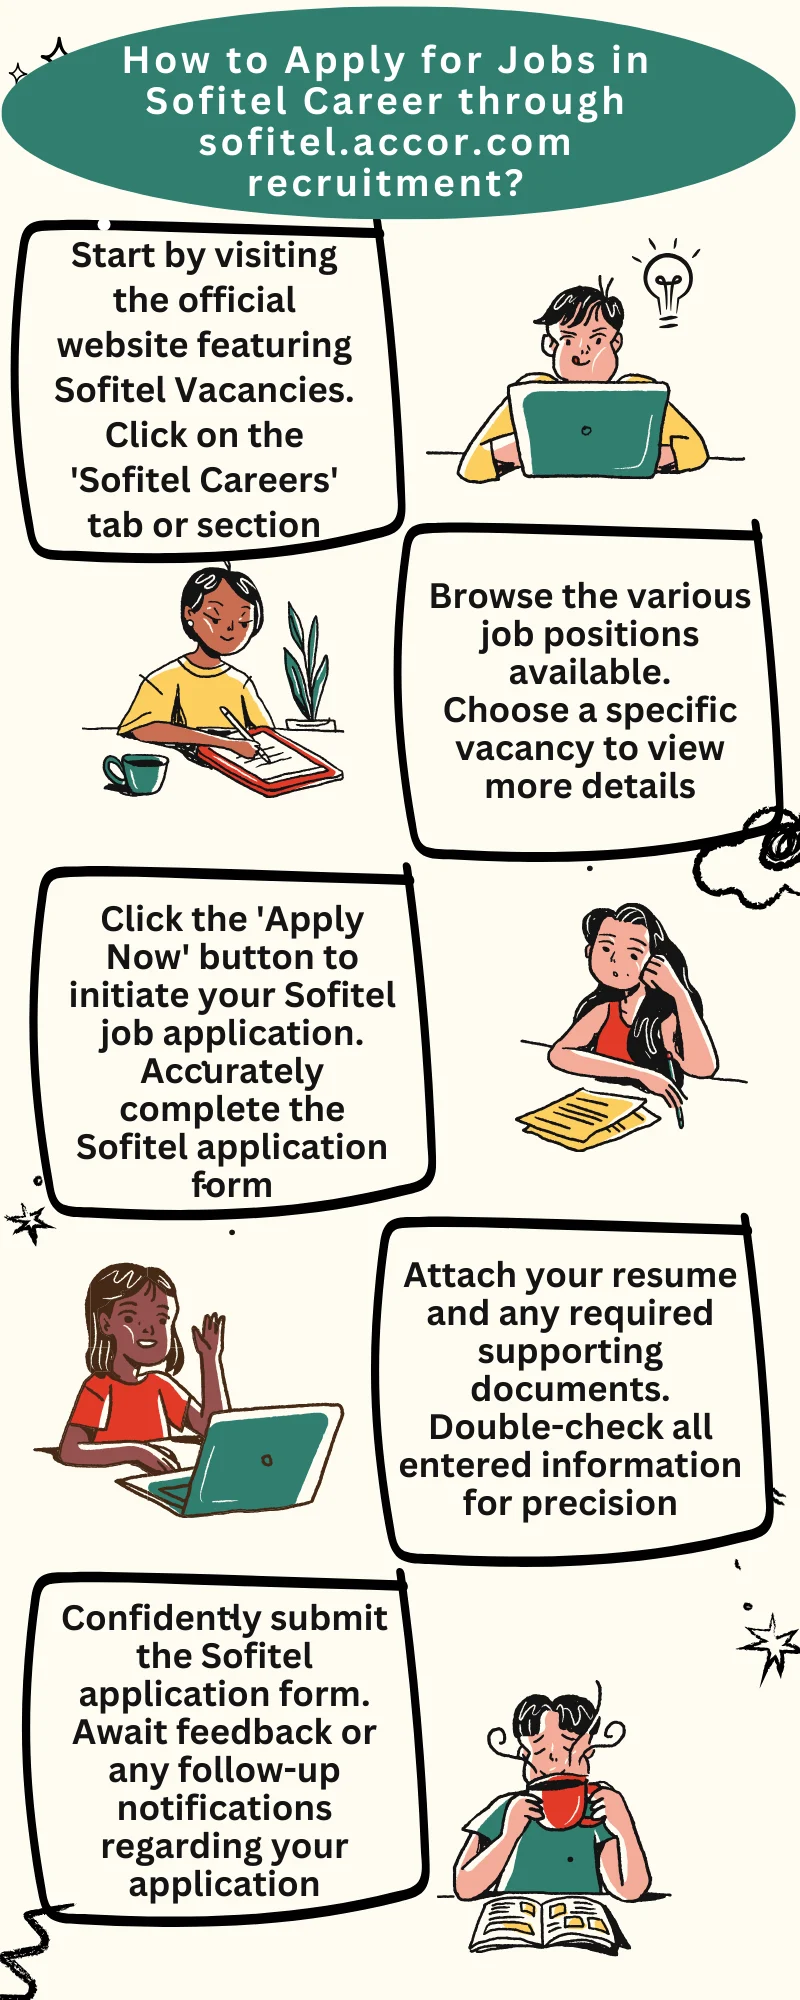 How to Apply for Jobs in Sofitel Career through sofitel.accor.com recruitment?